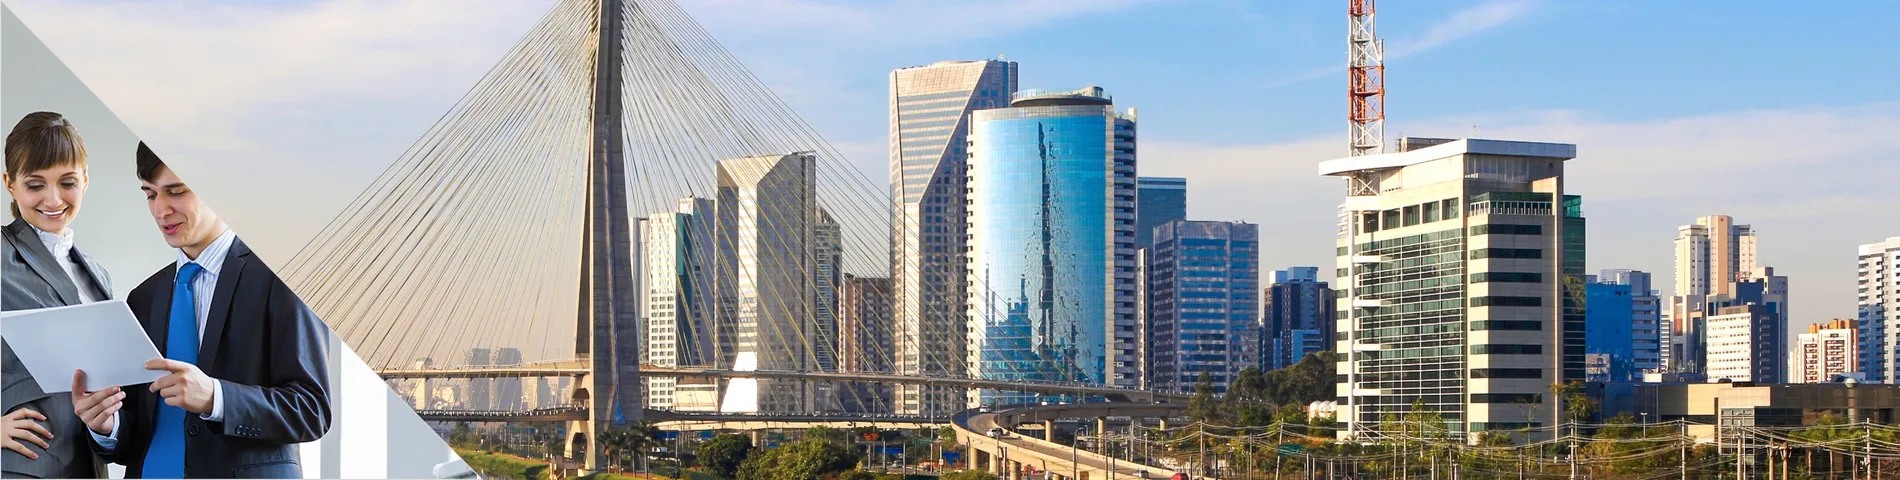 Sao Paulo - 